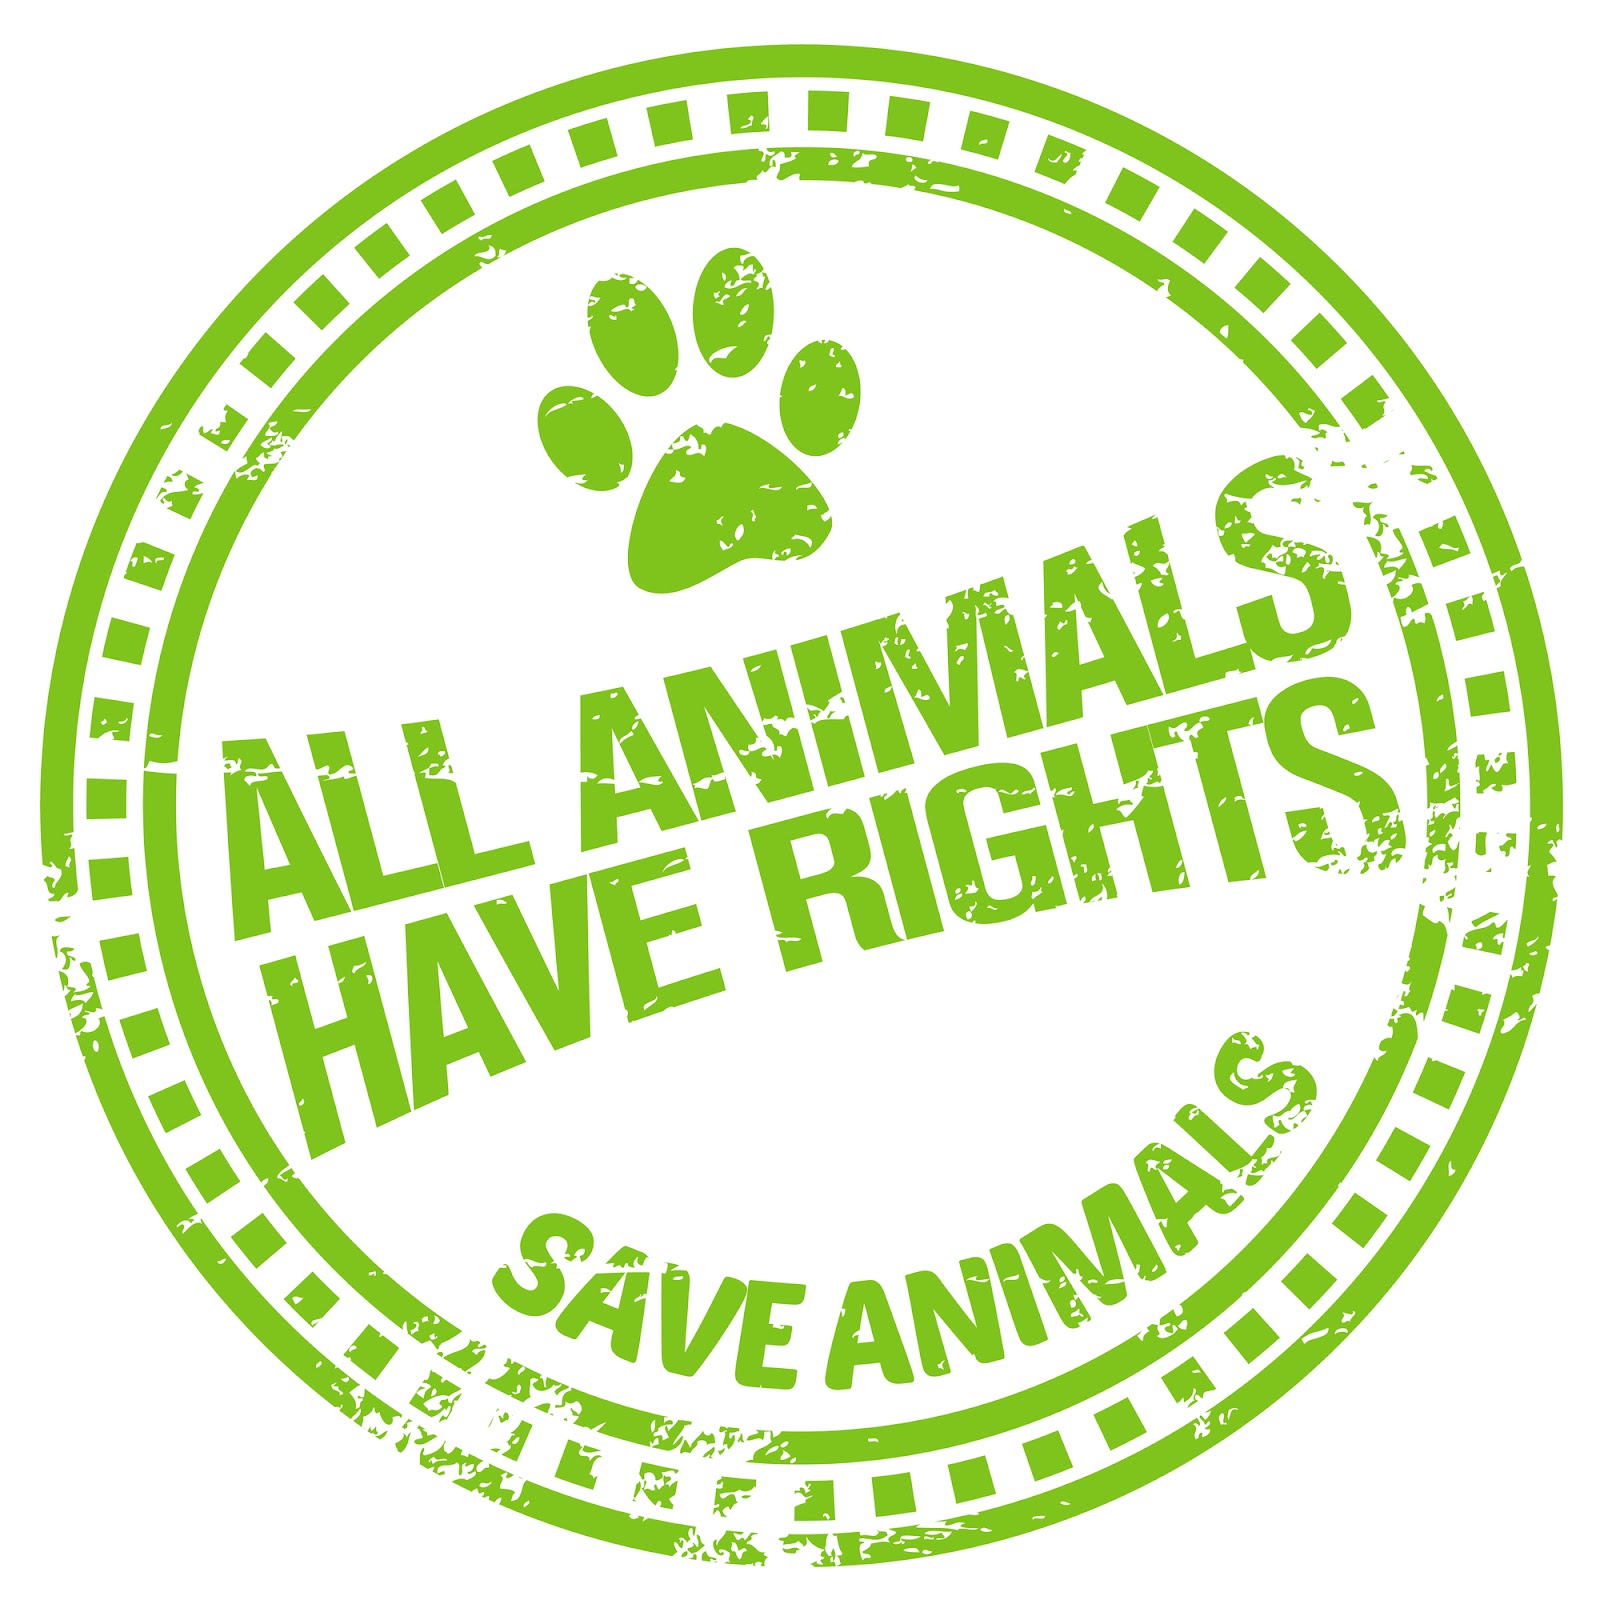 essays on animal rights